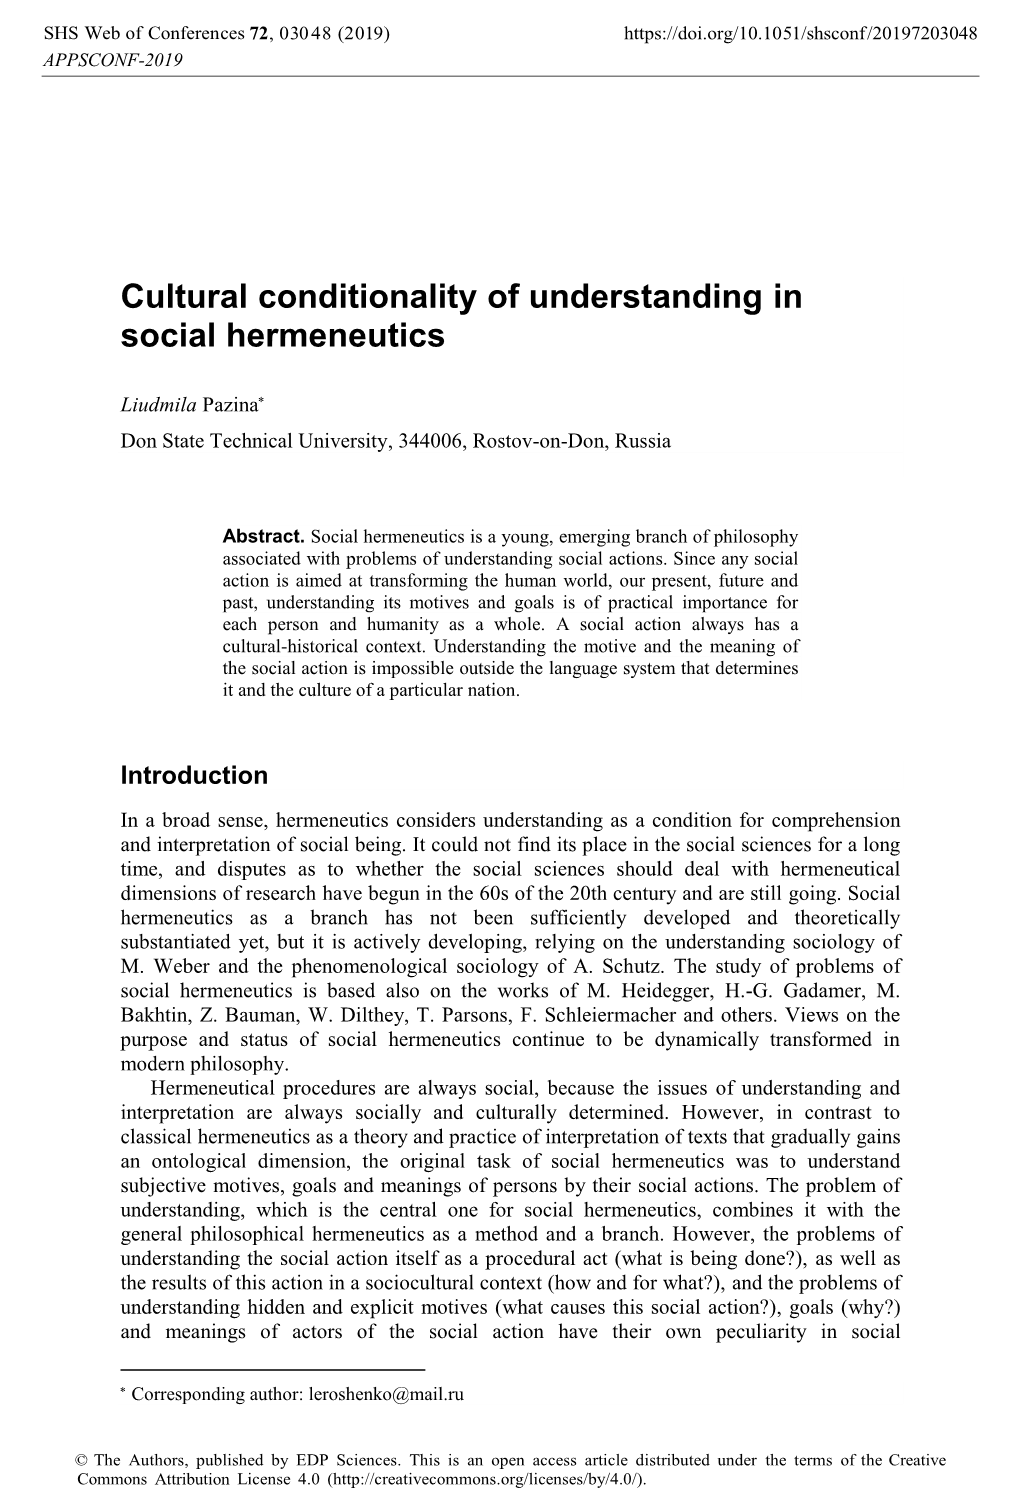 Cultural Conditionality of Understanding in Social Hermeneutics